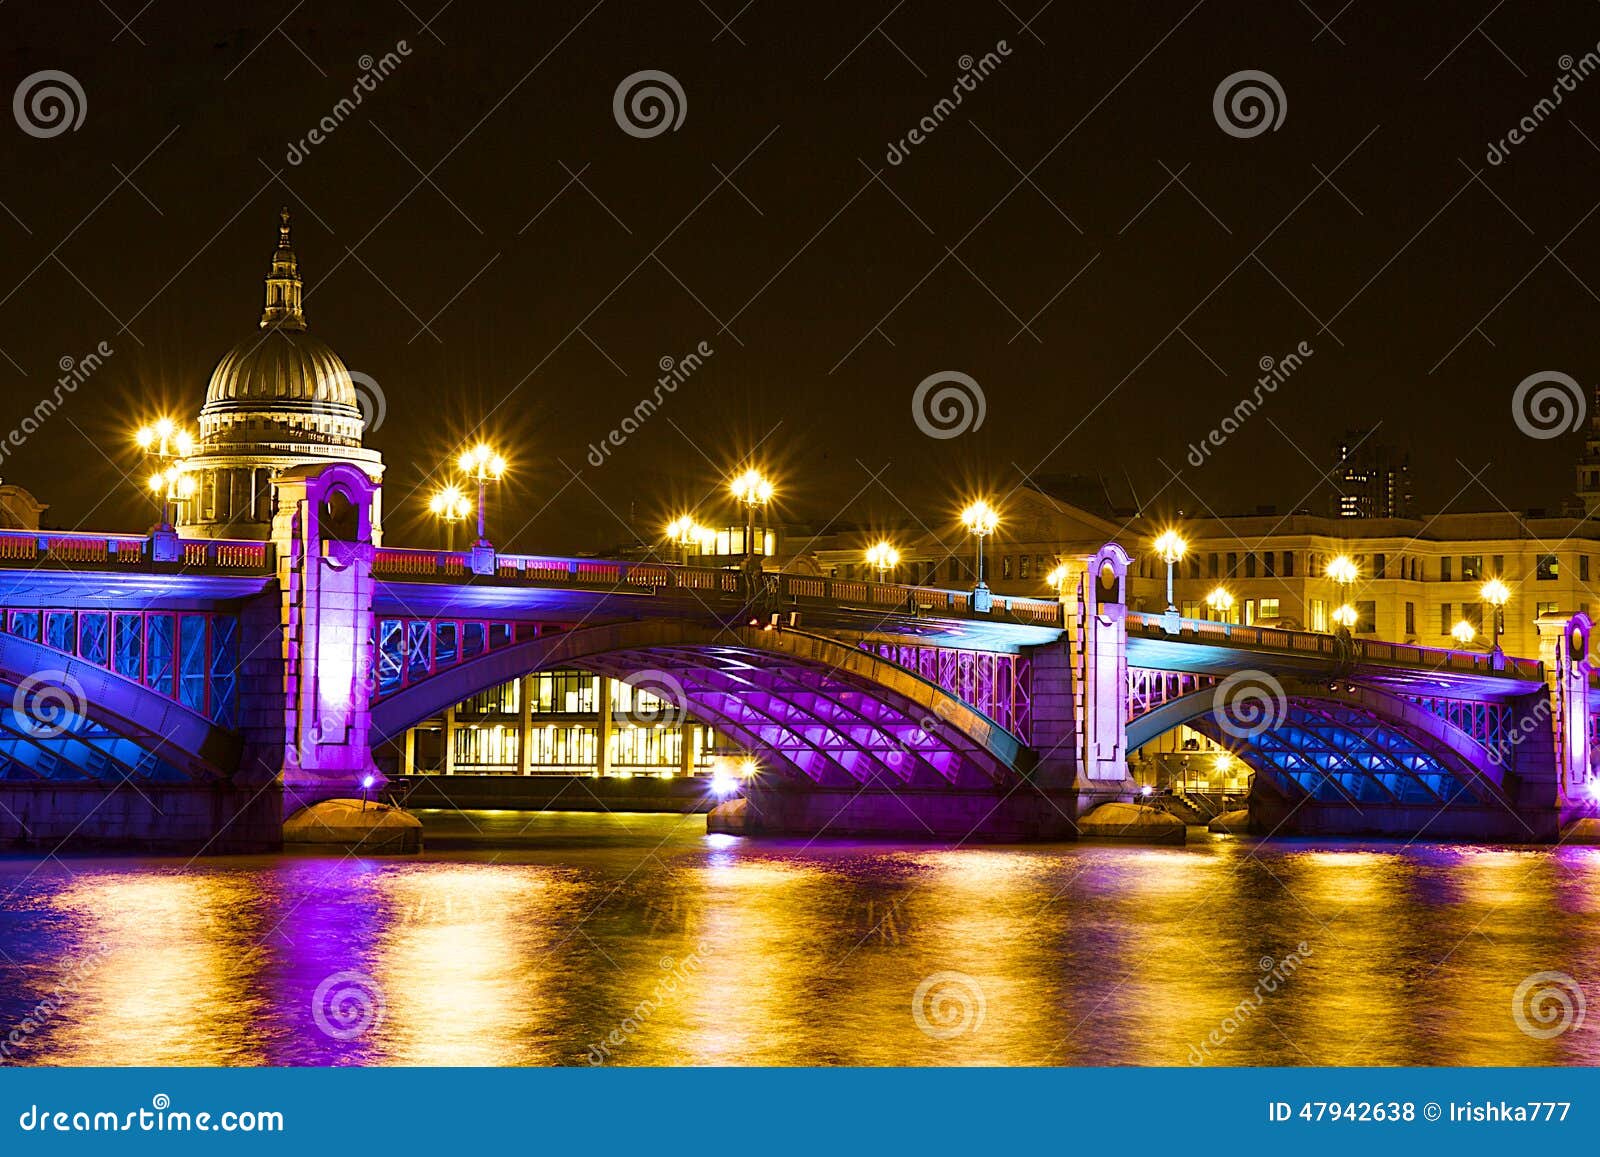 southwark bridge at christmas, london